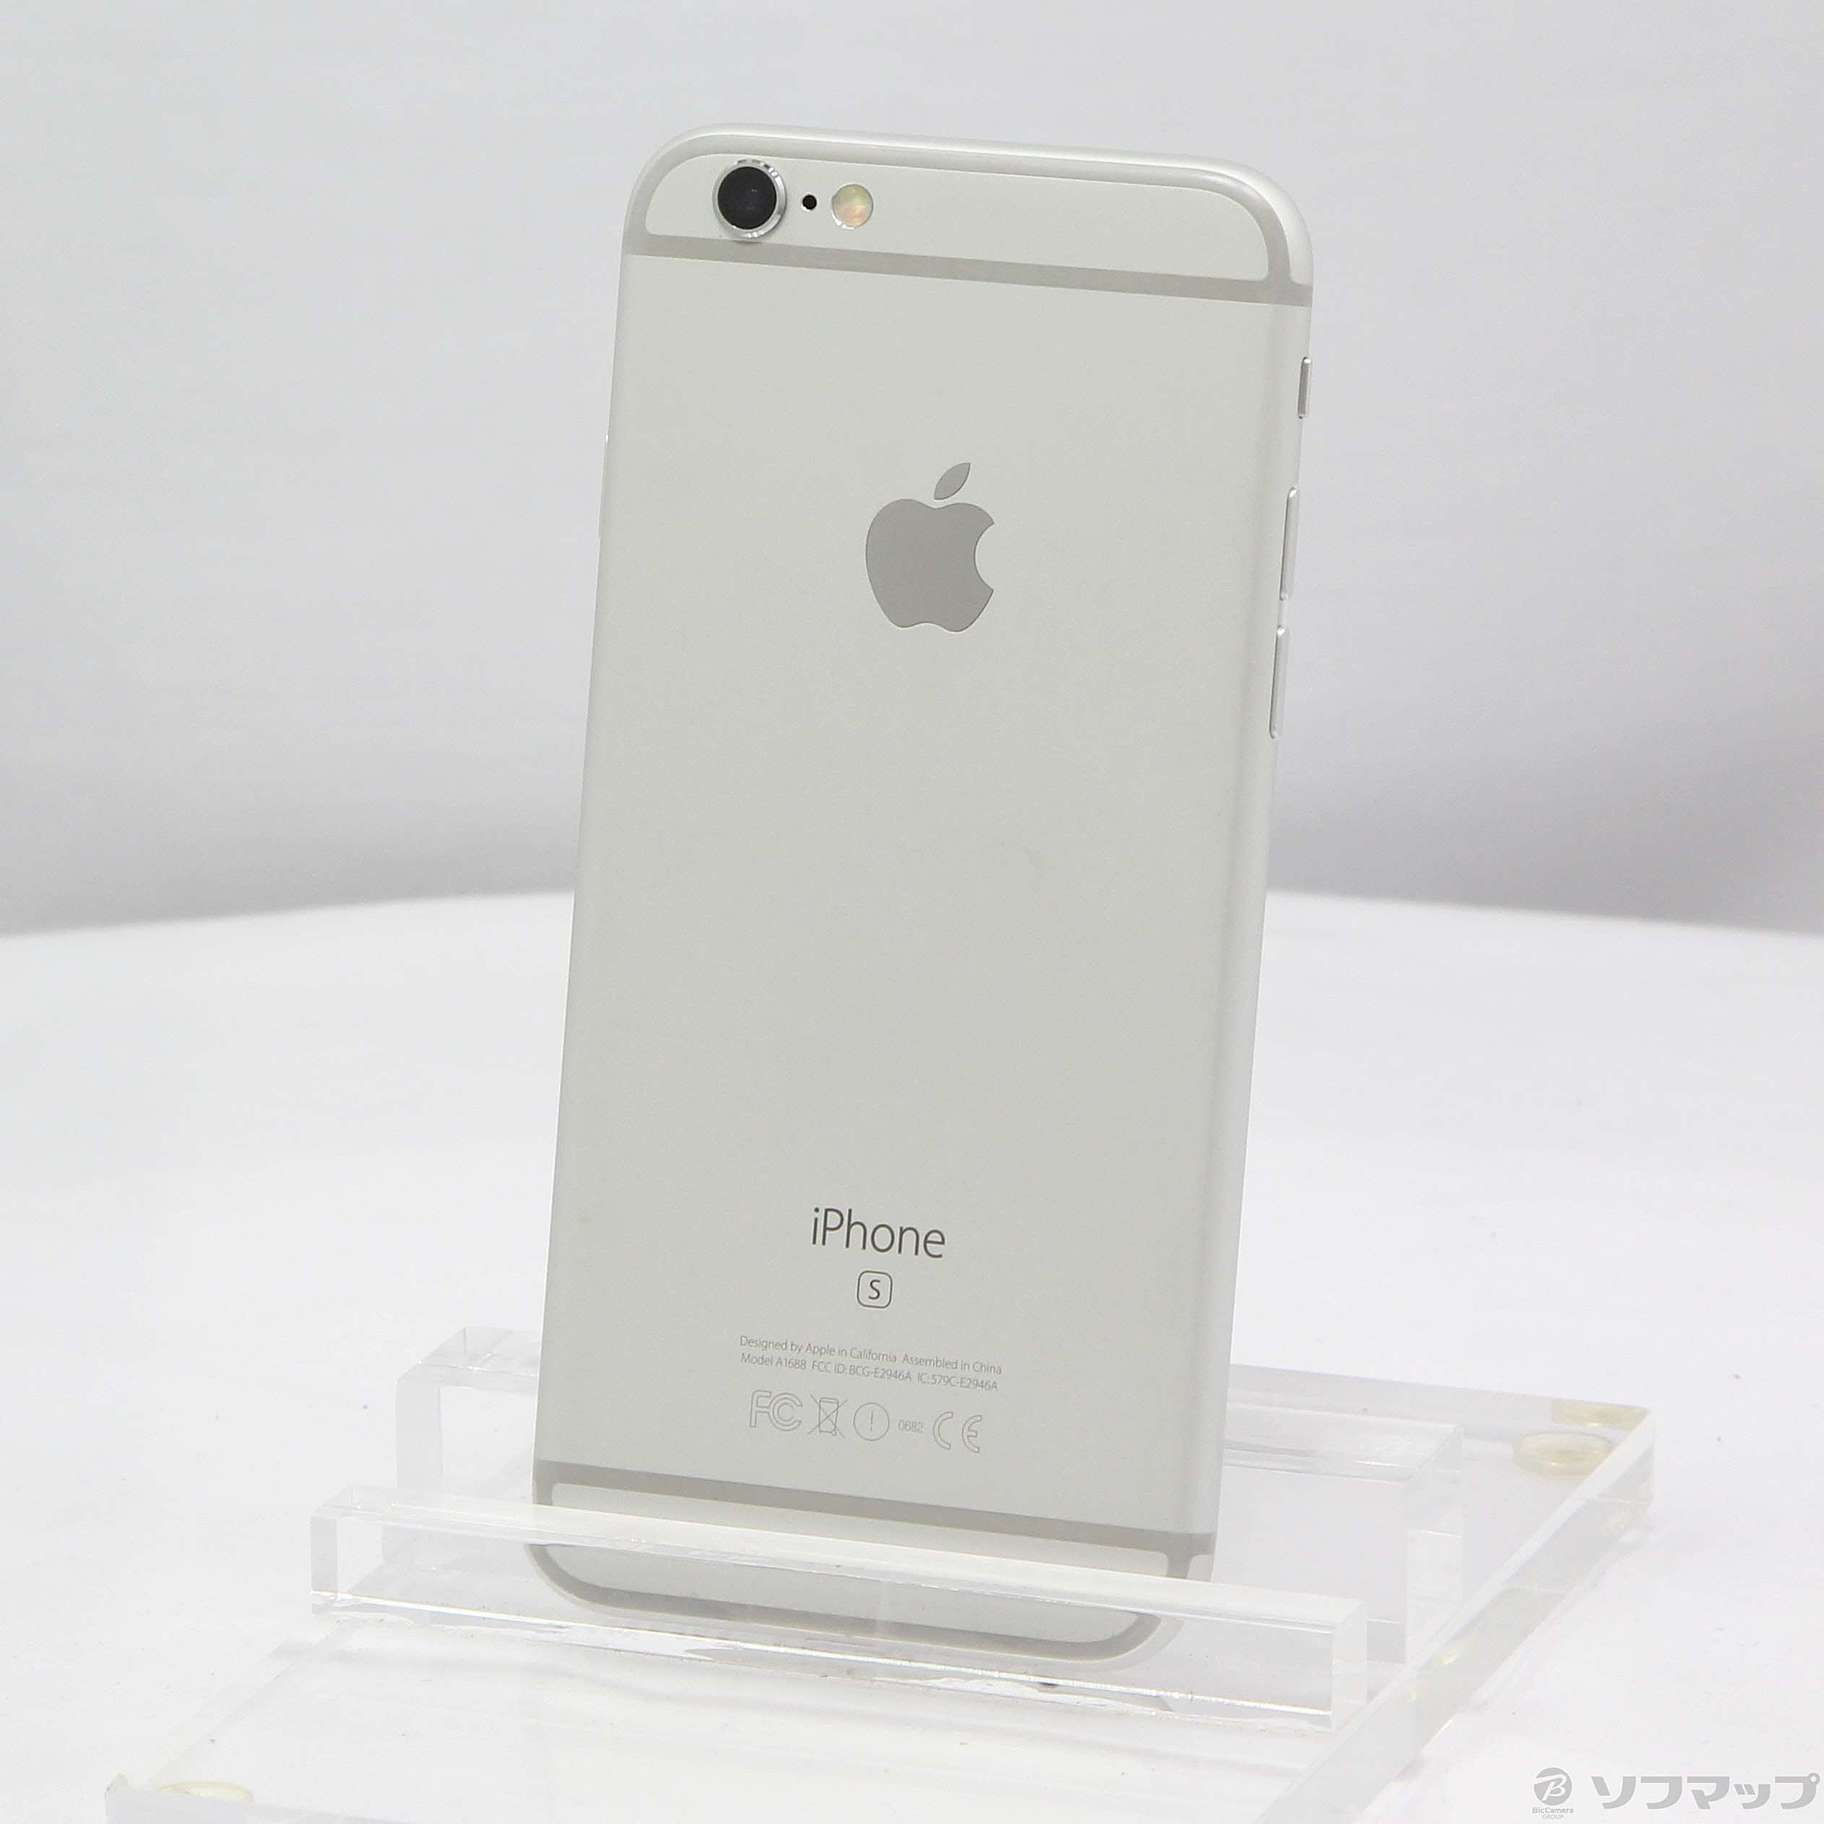 iPhone6s Silver 64GB SIMフリー Apple - スマートフォン本体